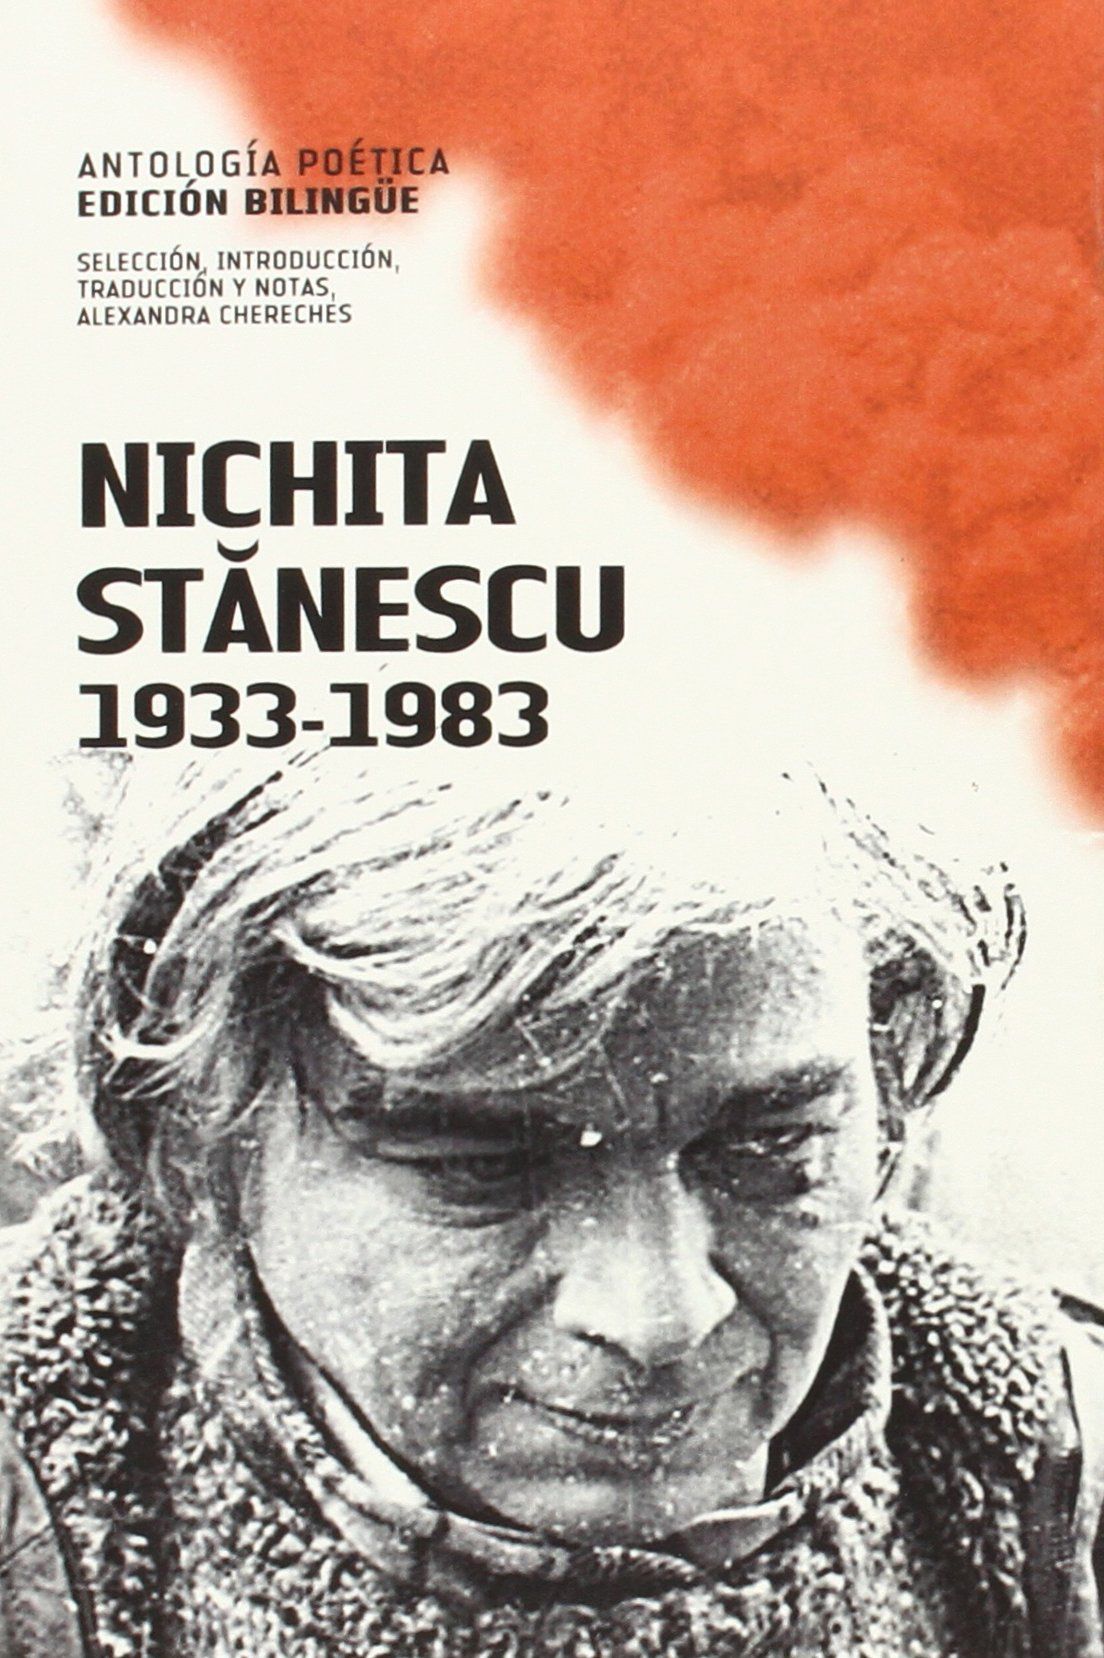 ANTOLOGIA POETICA NICHITA STANESCU 1933-1983